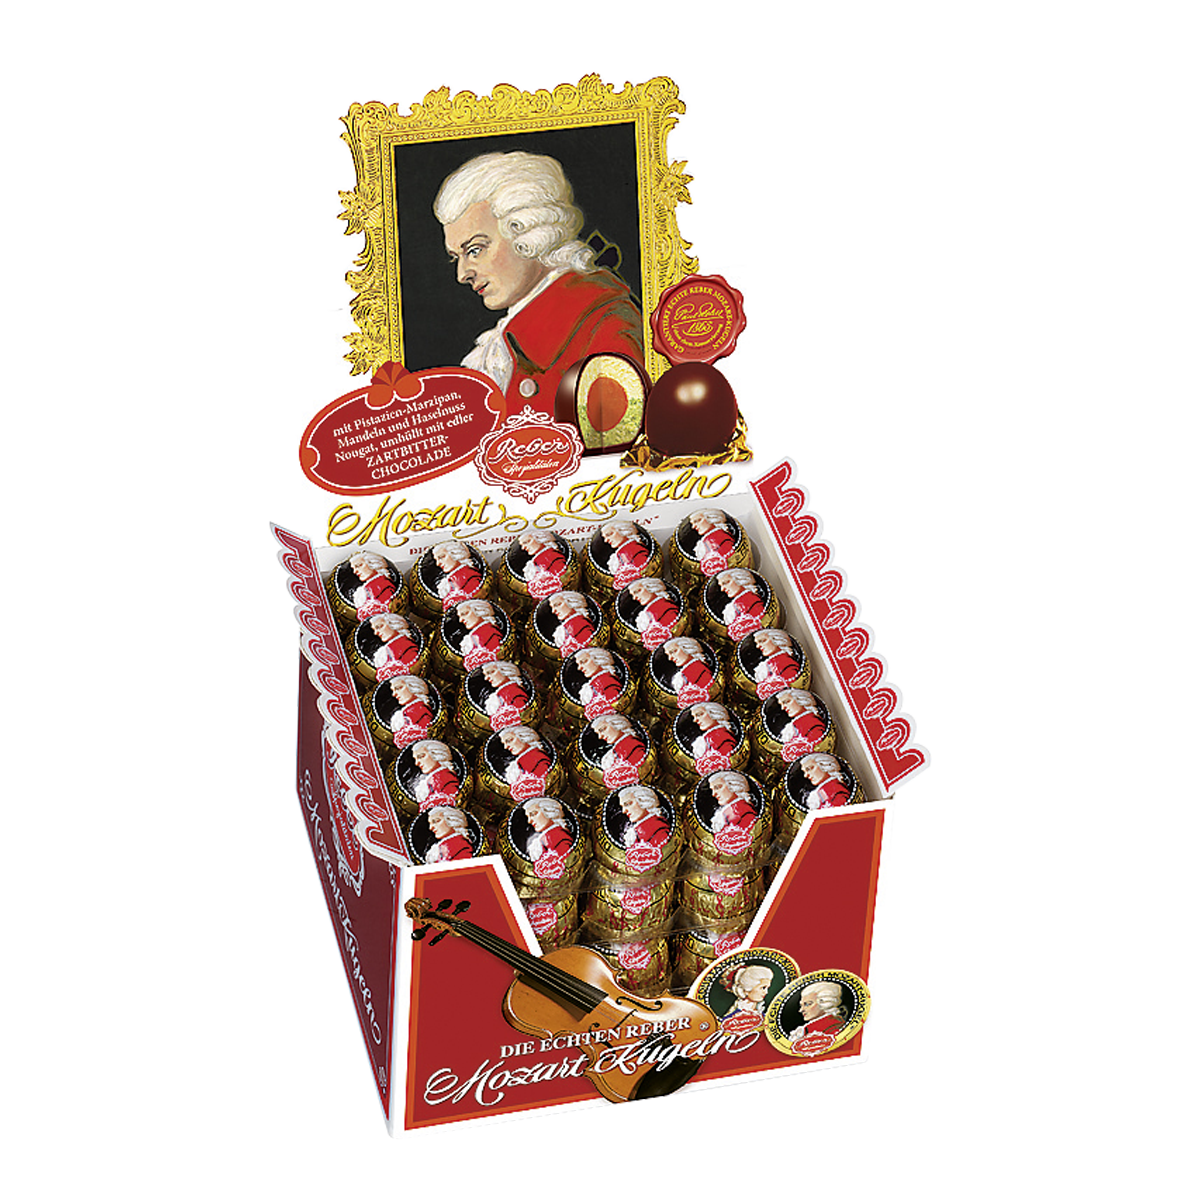  Reber Mozart-Kugeln - Schokoladen snack